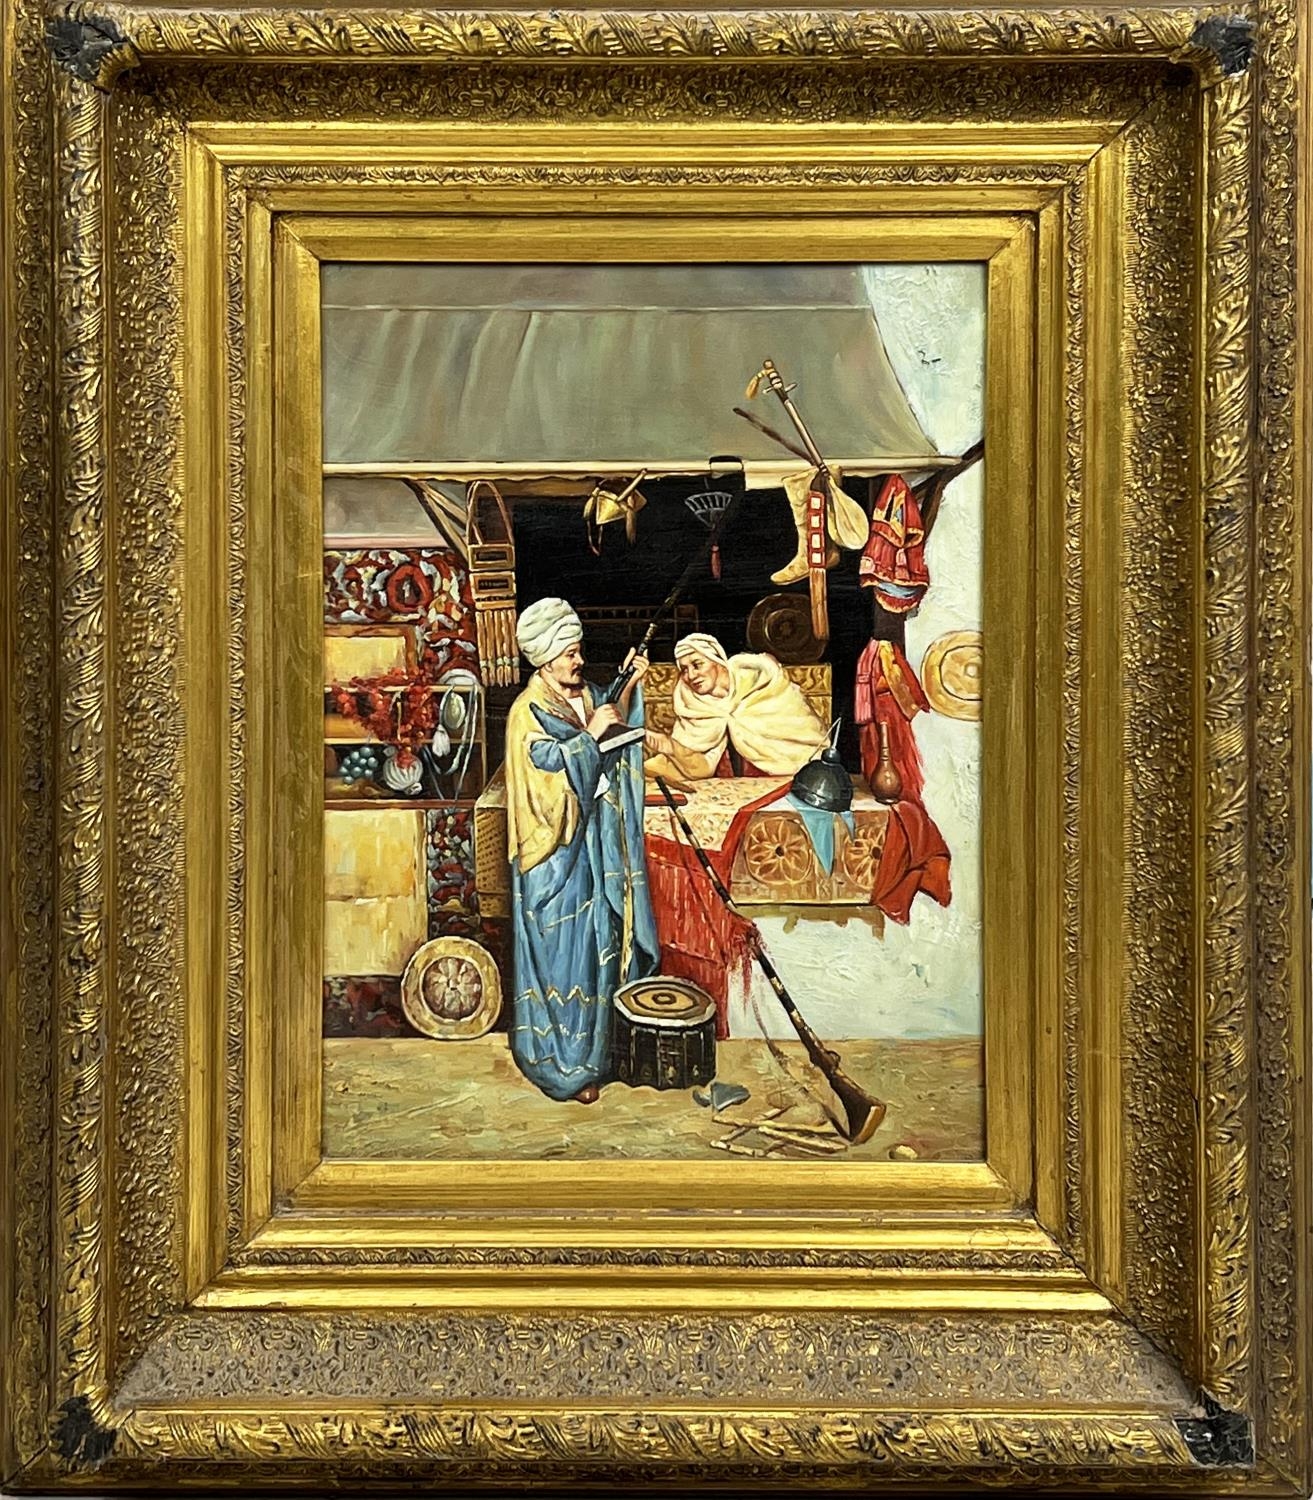 MANNER OF FILIPO BARATTI, 'Market Traders', oil on board, 39cm x 29cm, framed.